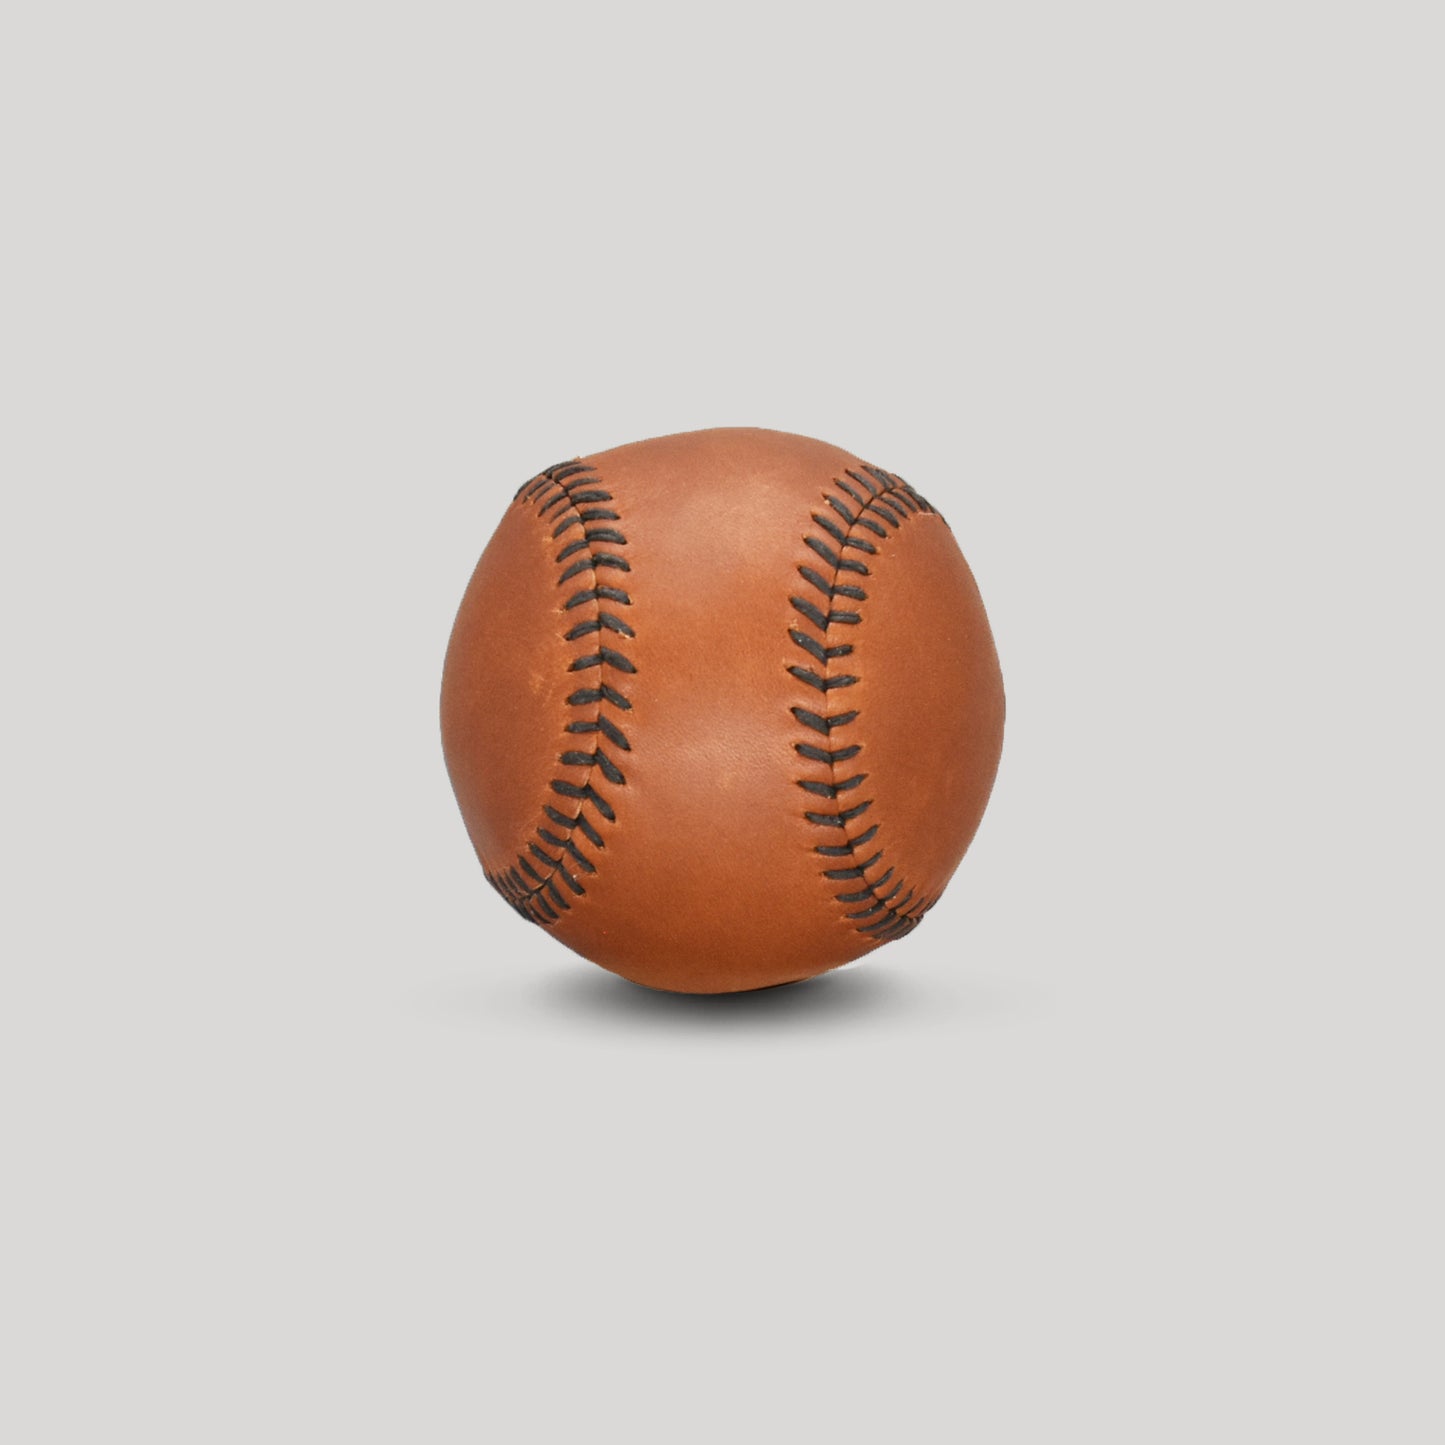 
                  
                    Bourbon "Old Fashioned" Figure 8 Baseball
                  
                